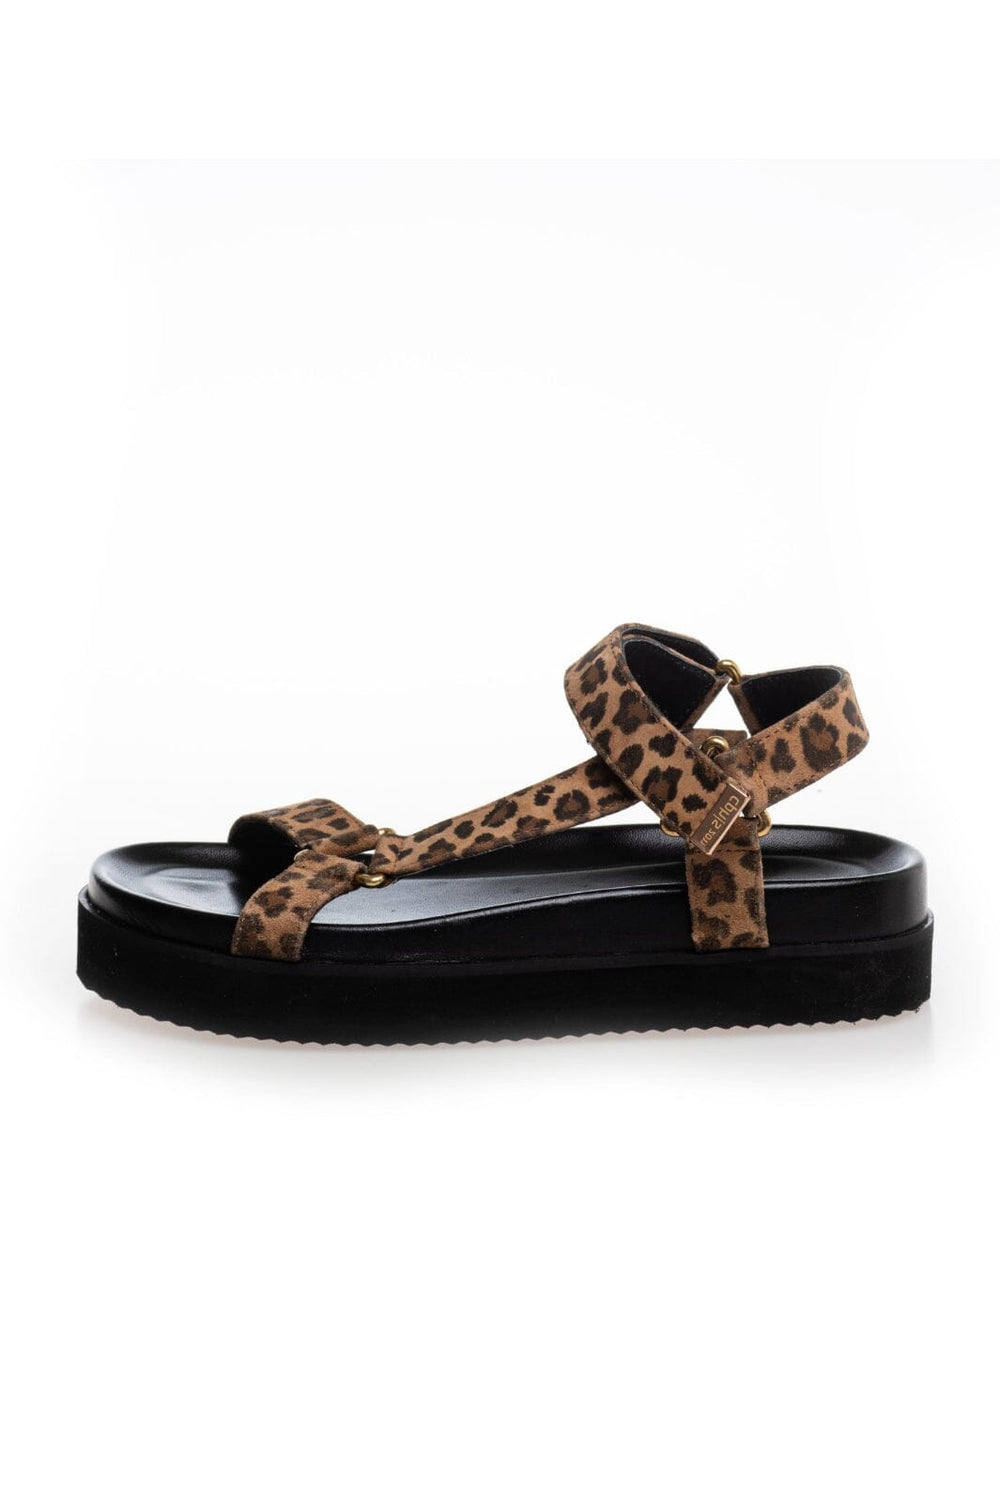 Forudbestilling - Copenhagen Shoes - Adventure Leo - 1500 Leopard - (Marts/April) Sandaler 